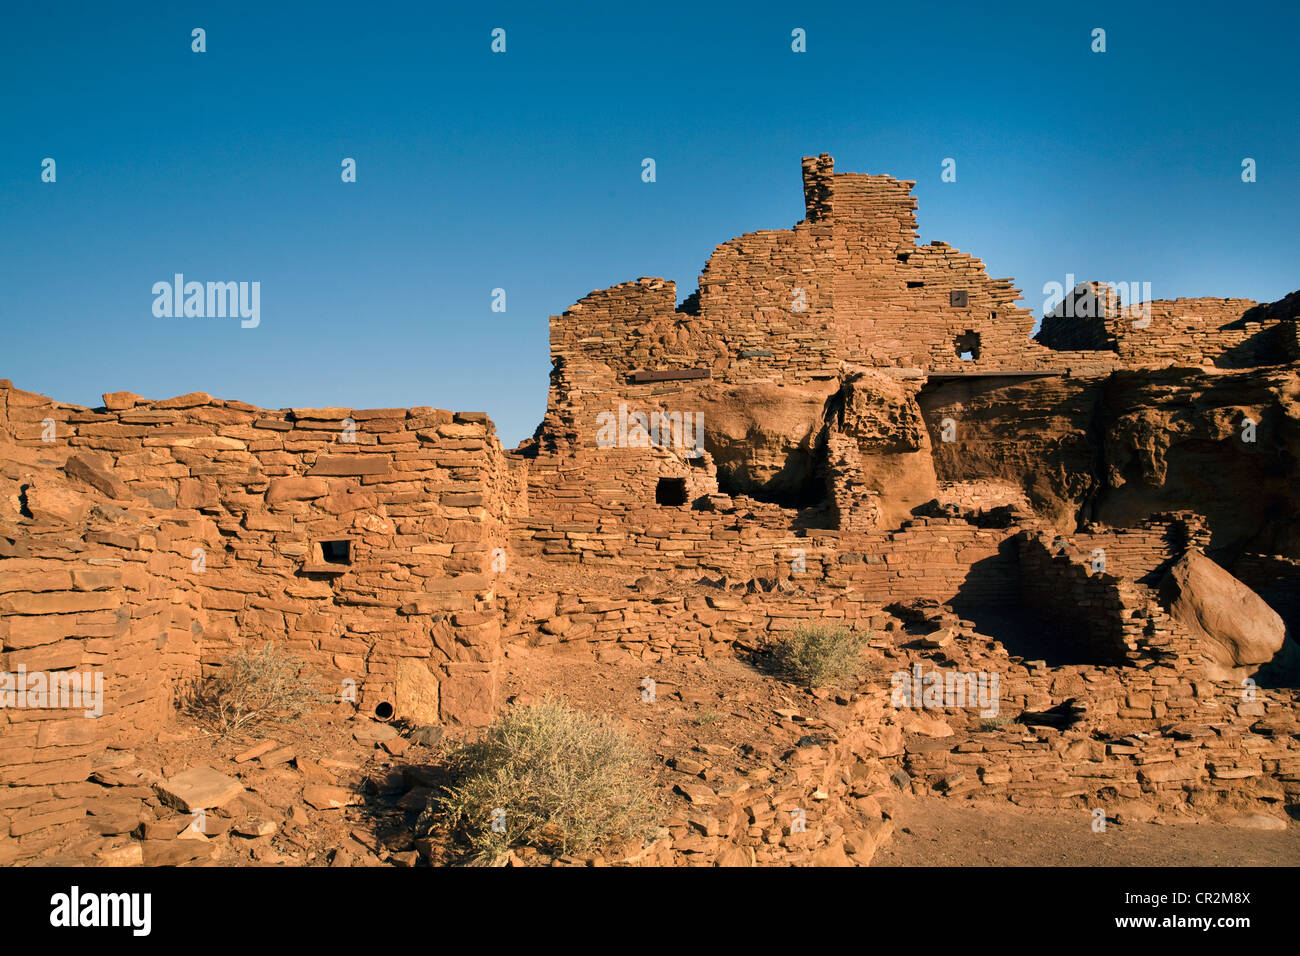 The sandstone walls of the Sinagua great house of Wupatki, in Wupatki National Monument, Arizona Stock Photo